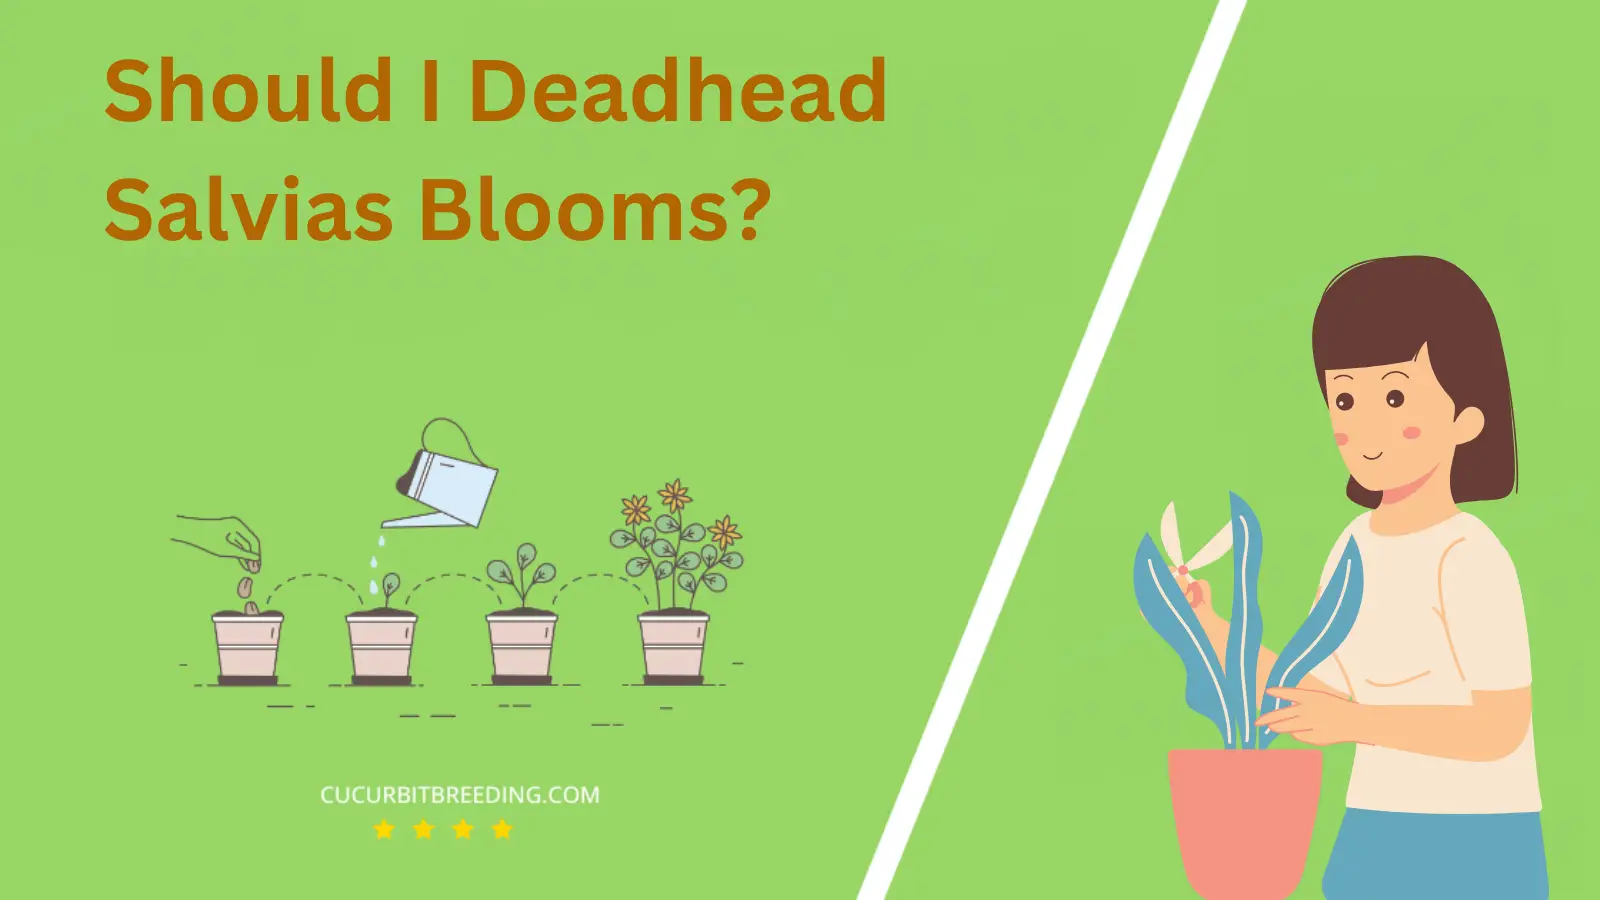 Should I Deadhead Salvias Blooms?